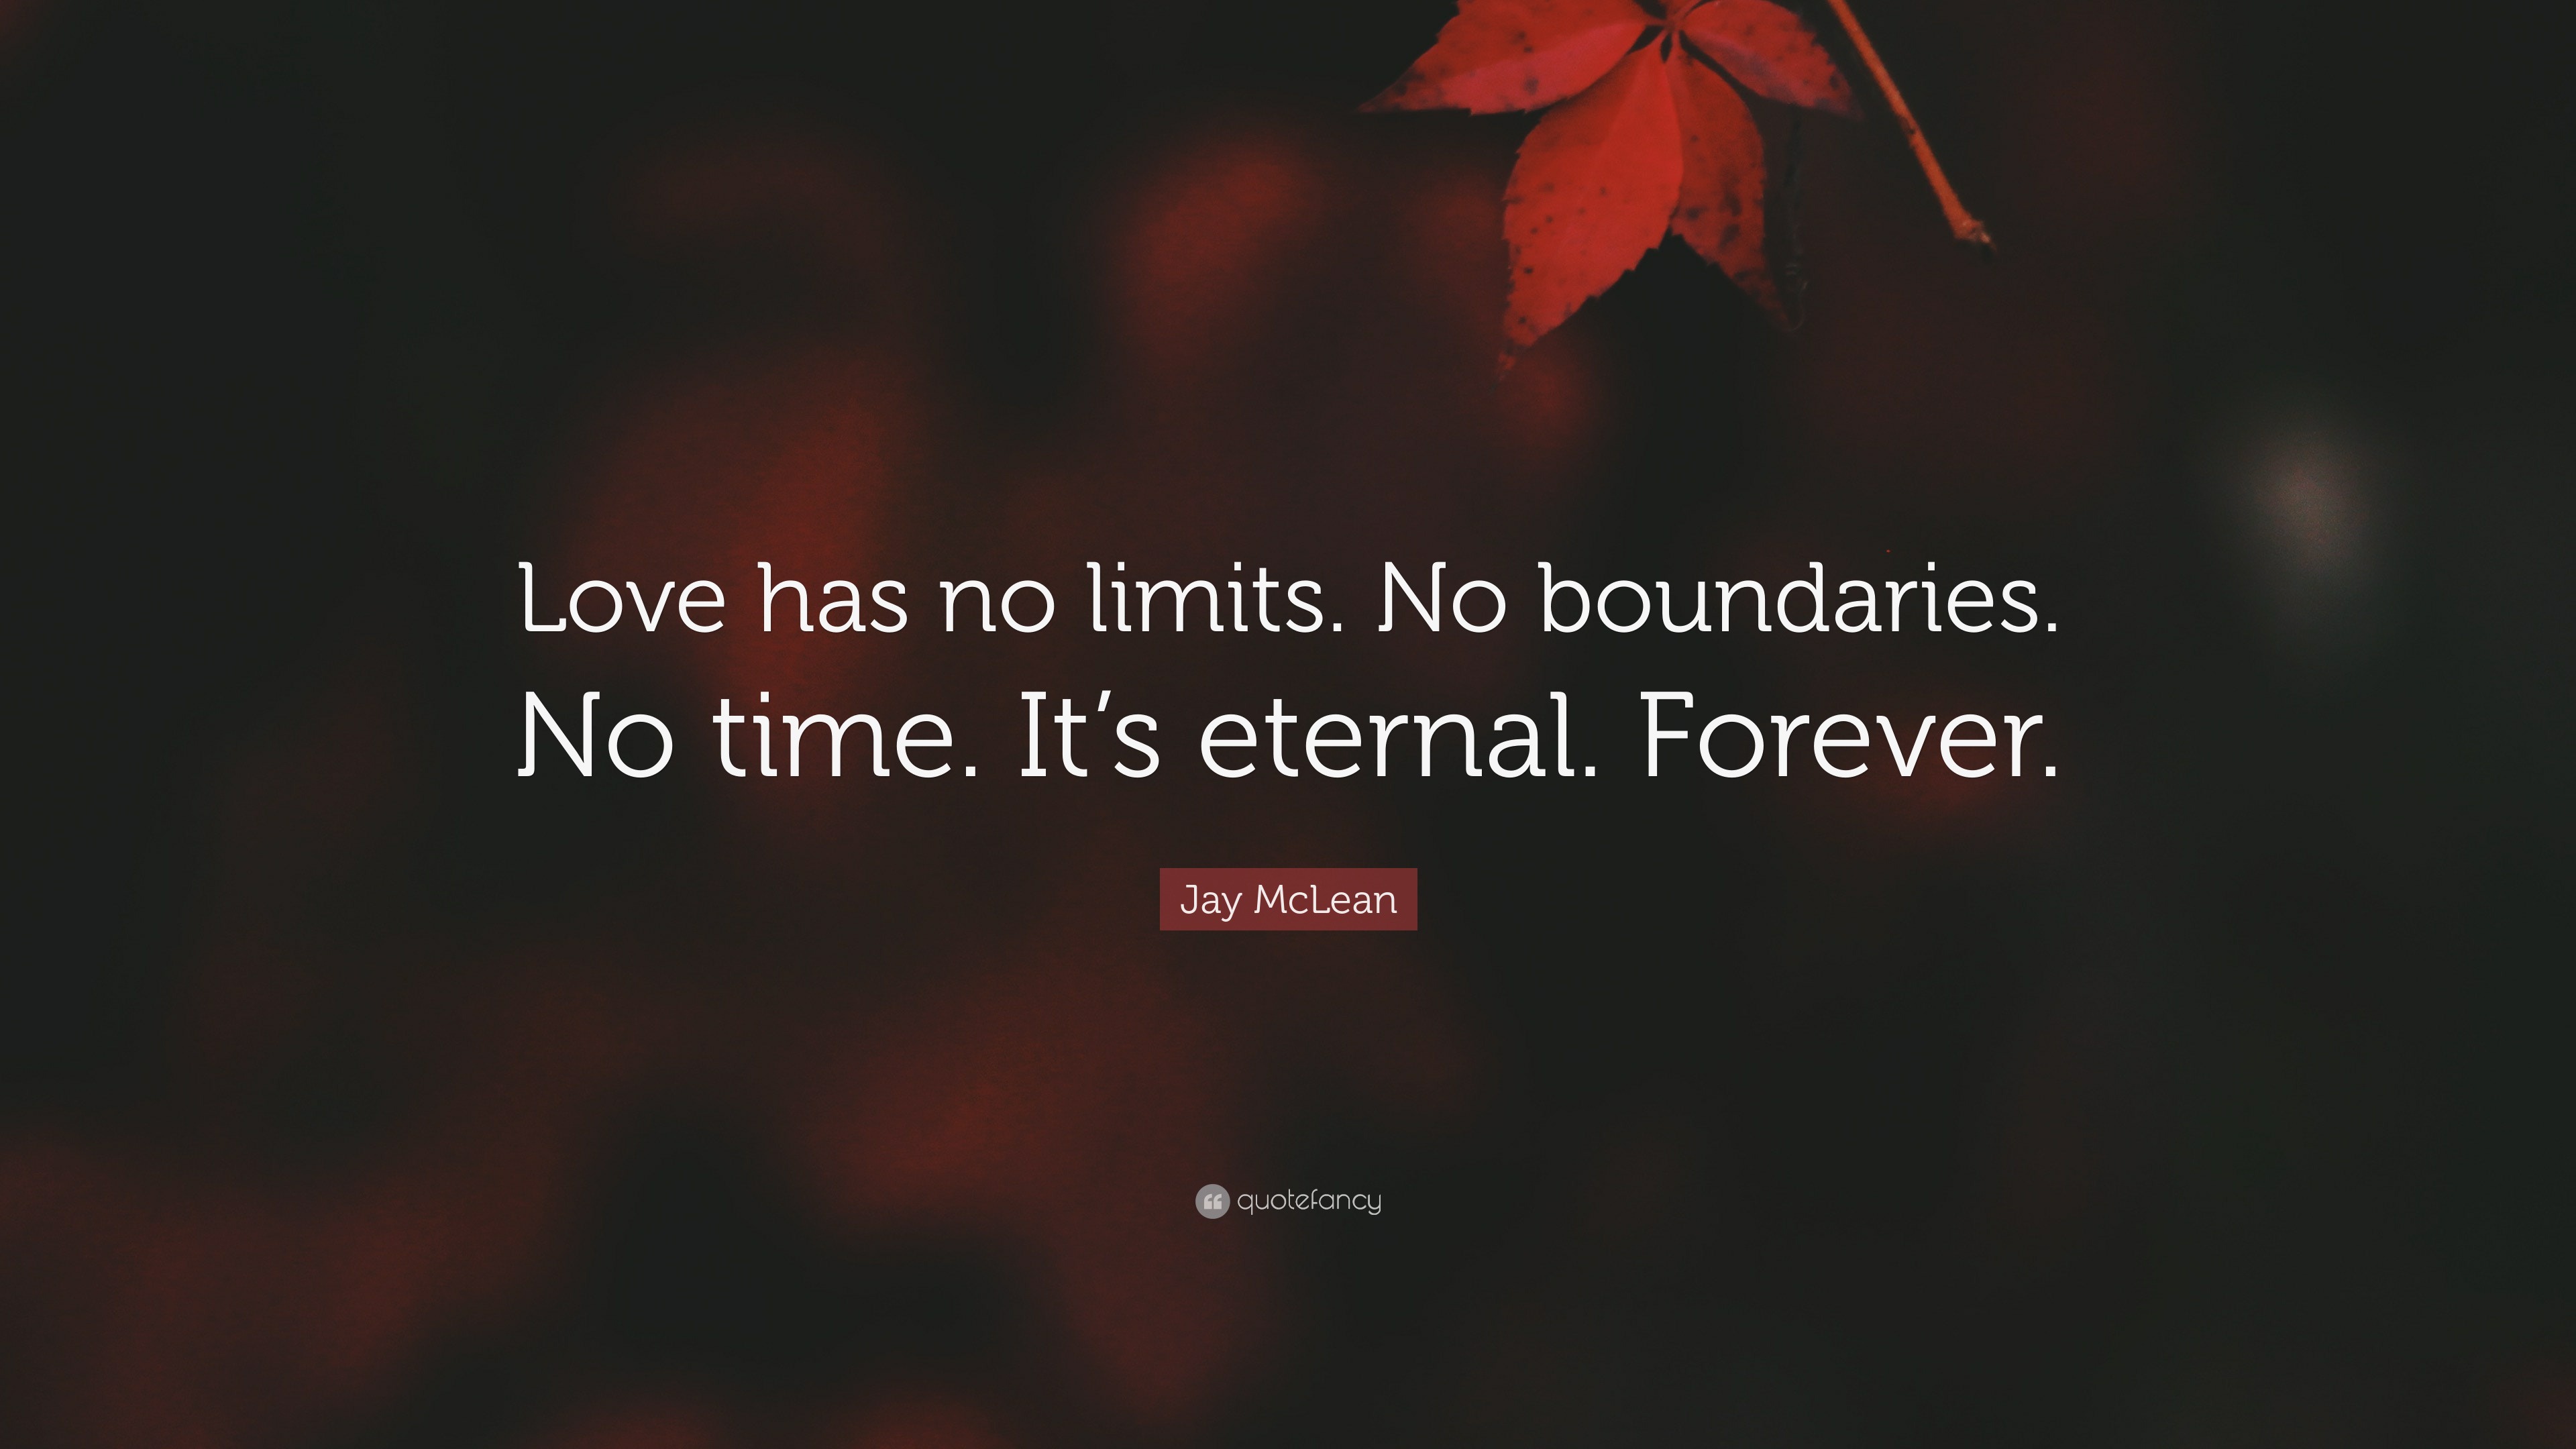 Jay McLean Quote: “Love has no limits. No boundaries. No time